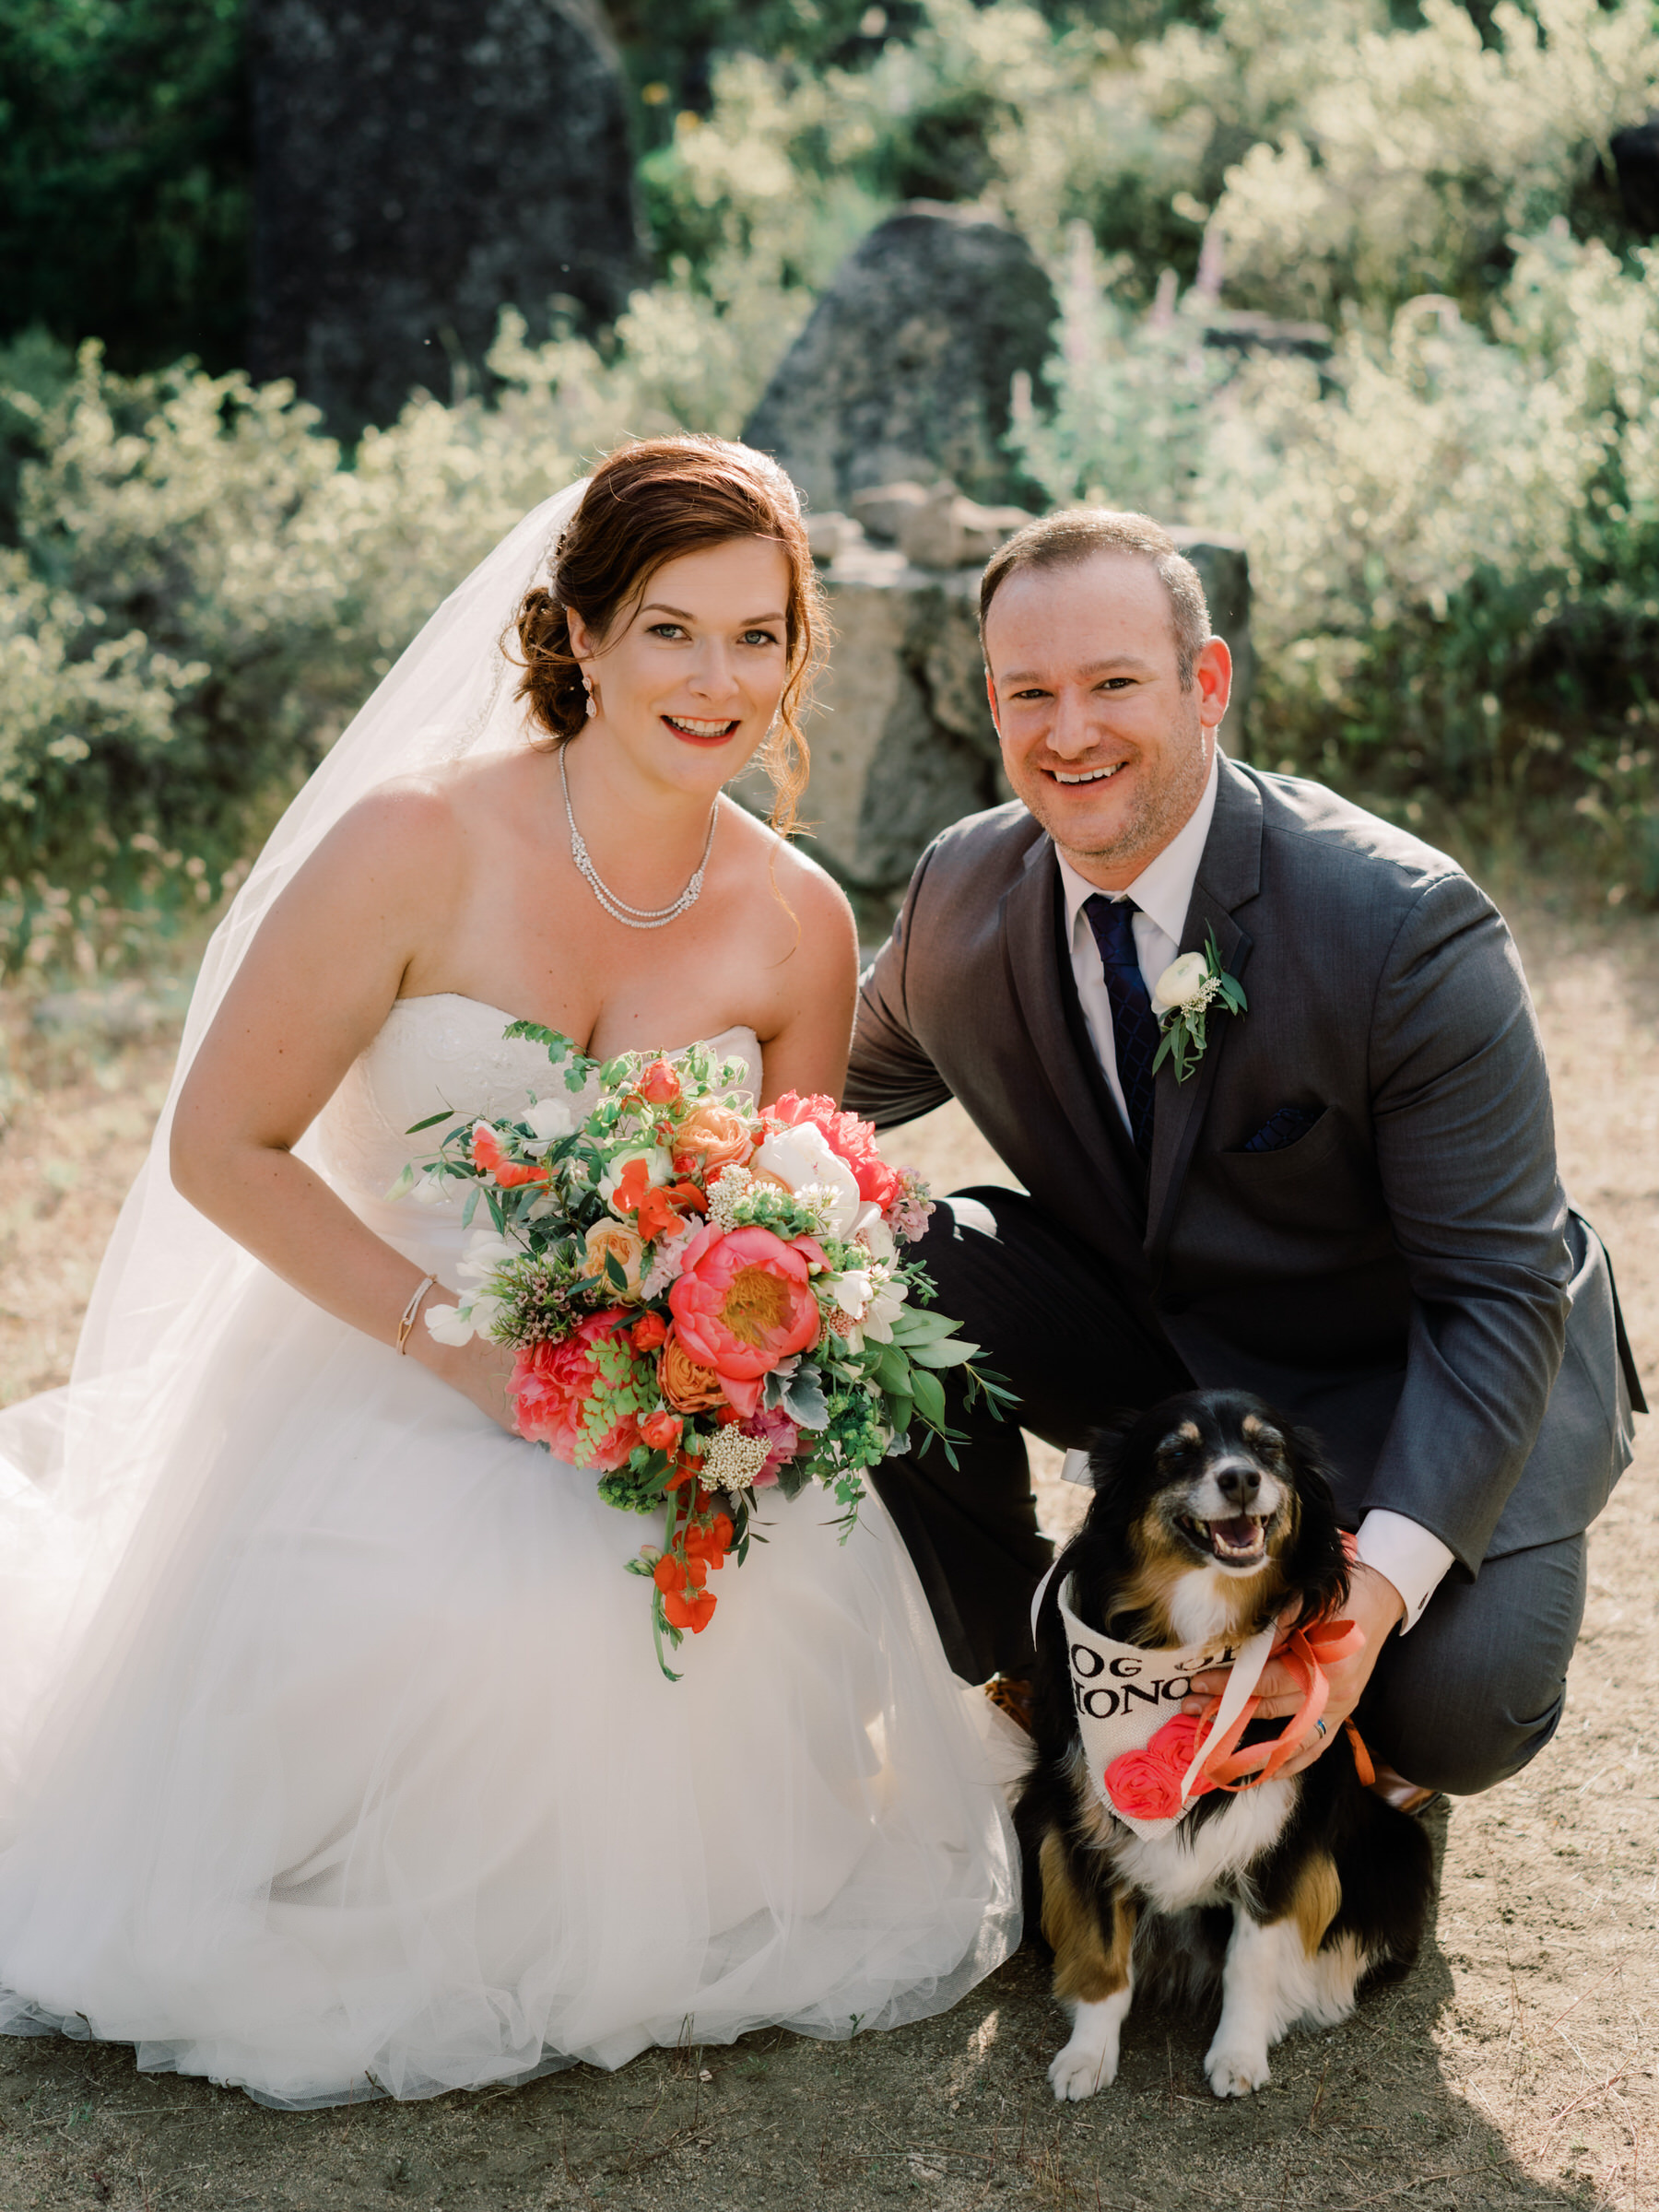 Leavenworth wedding photographer: Kristen and Russ wedding party portraits